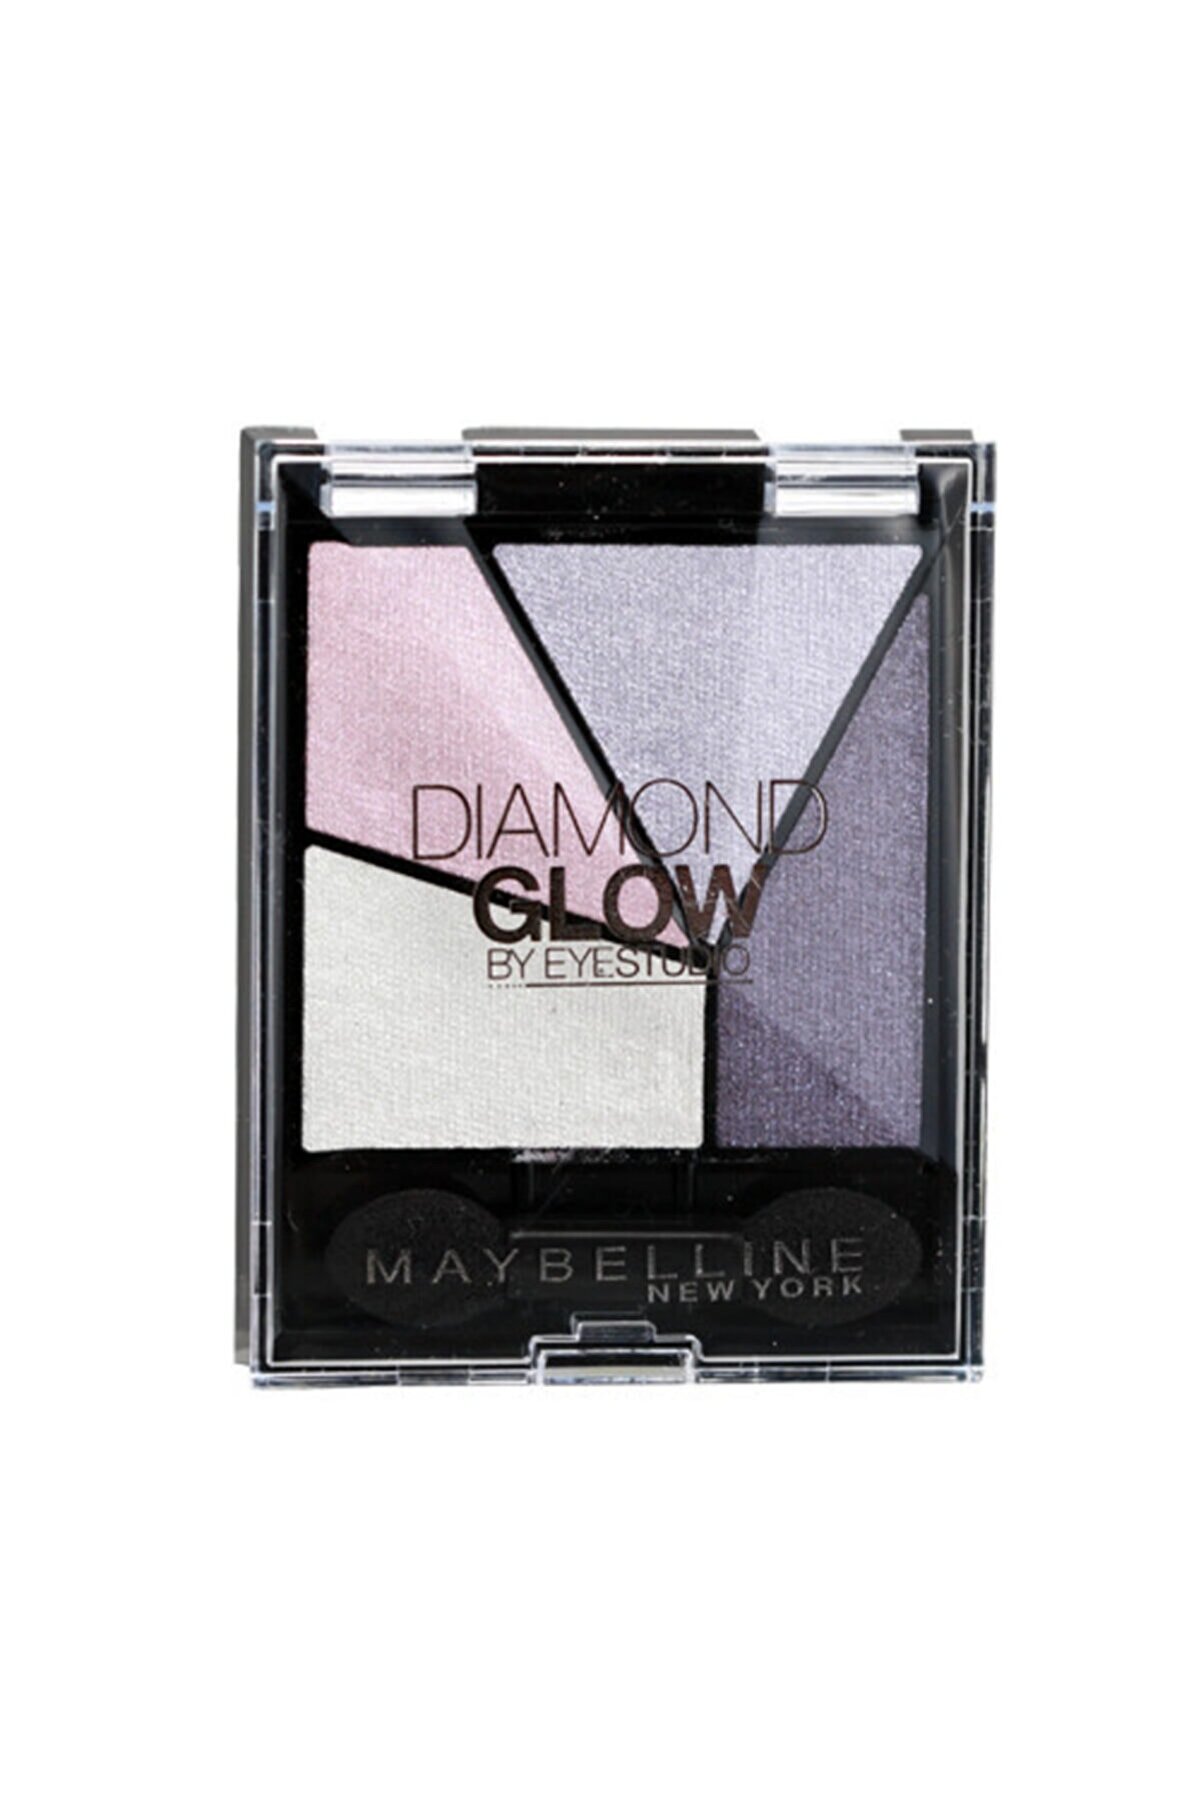 Maybelline New York Diamond Glow Far- 01 Purple Drama